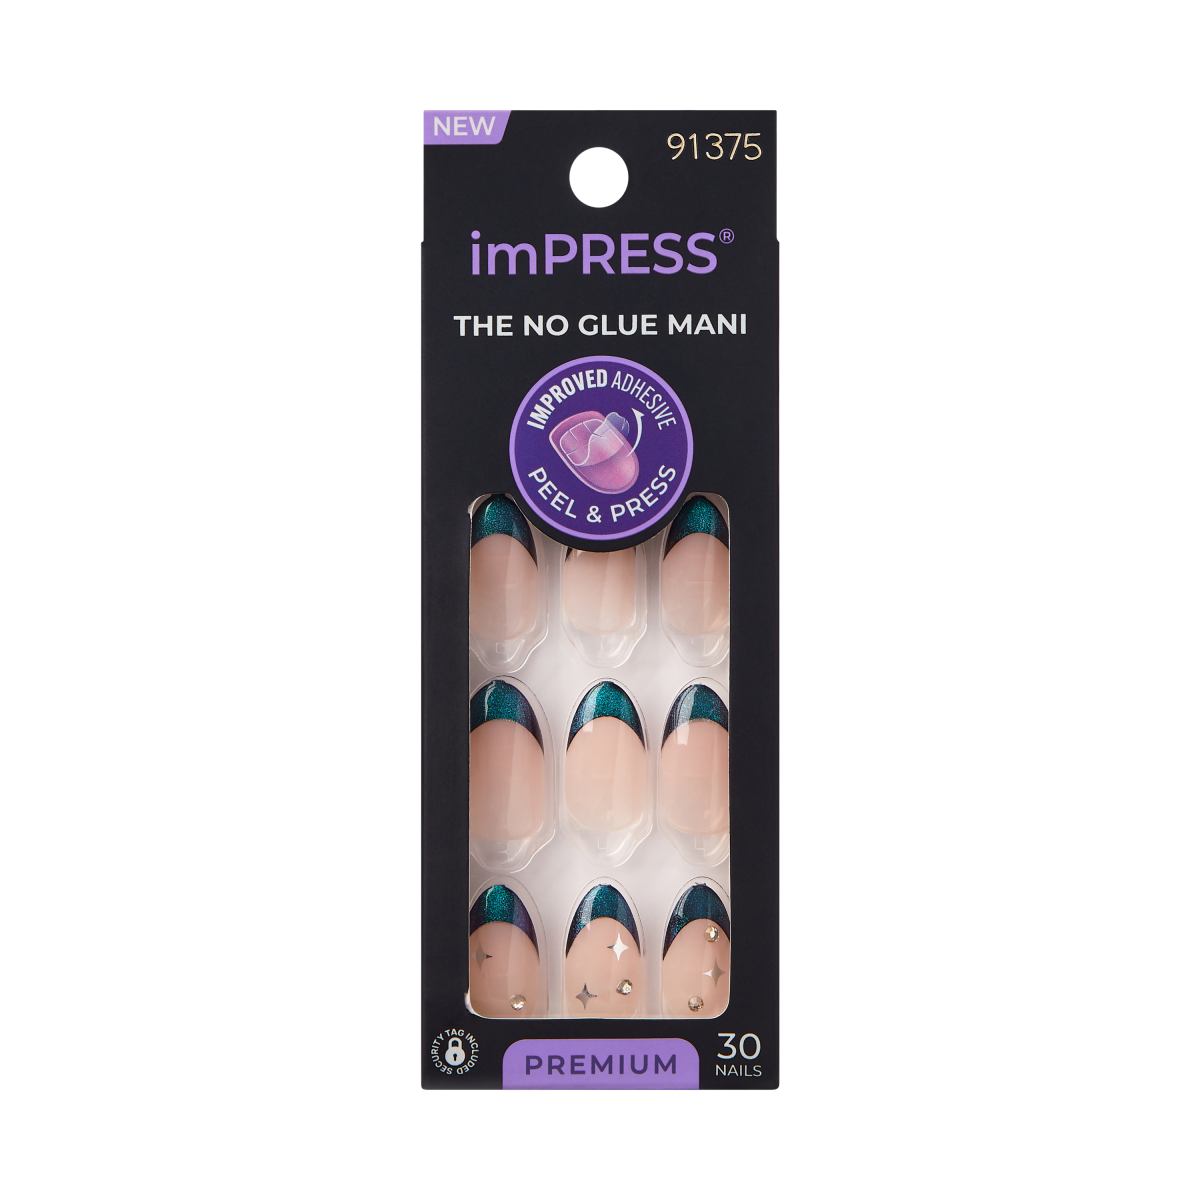 imPRESS Premium Press-On Manicure - Visions